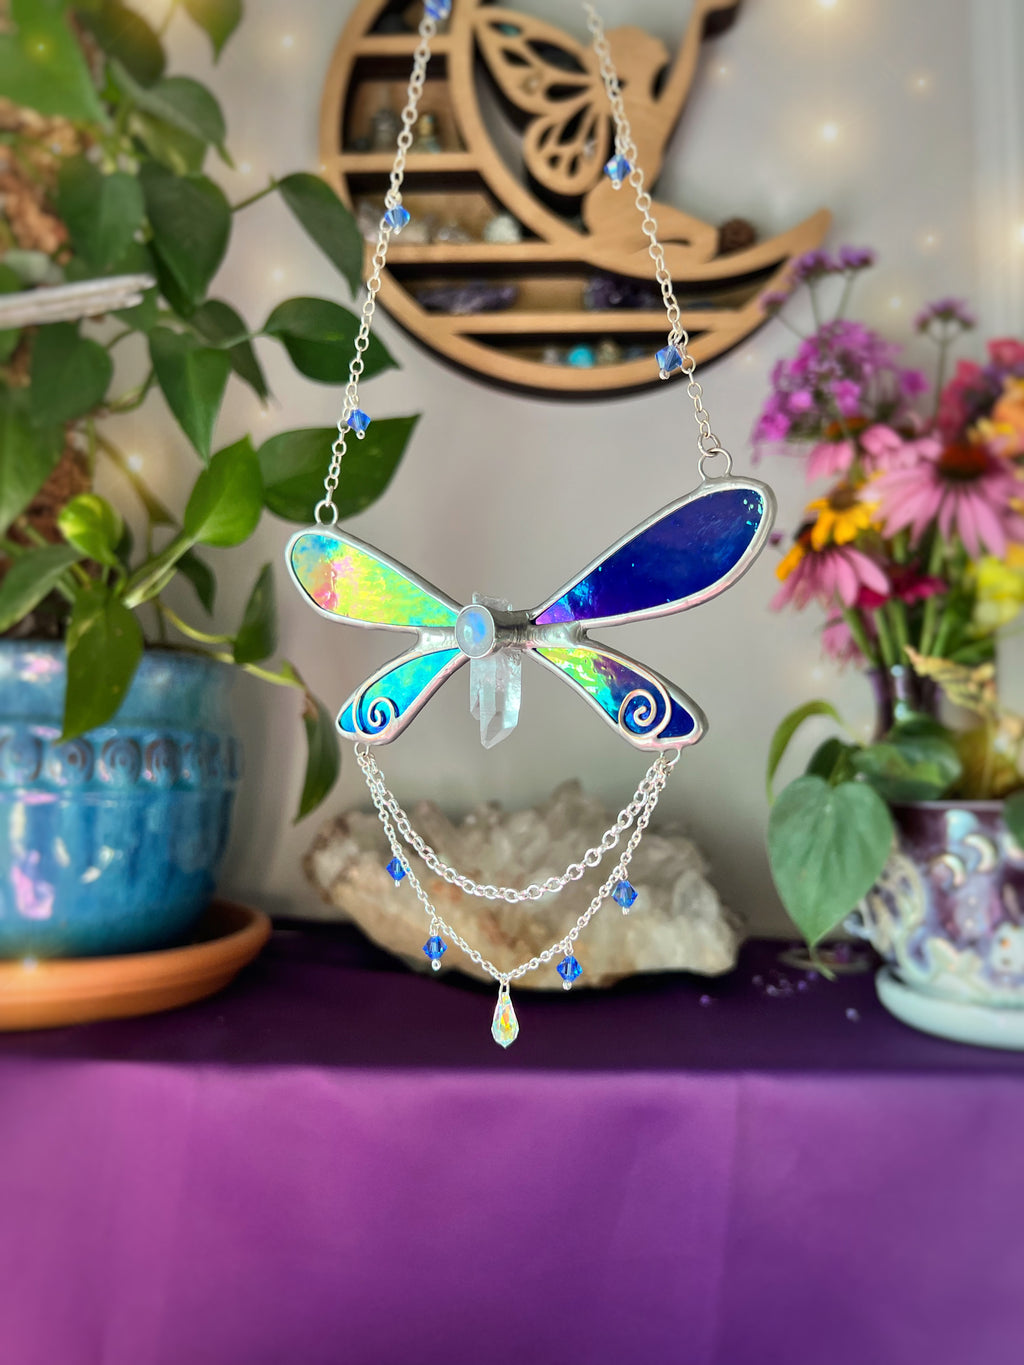 Iridescent blue fairy necklace